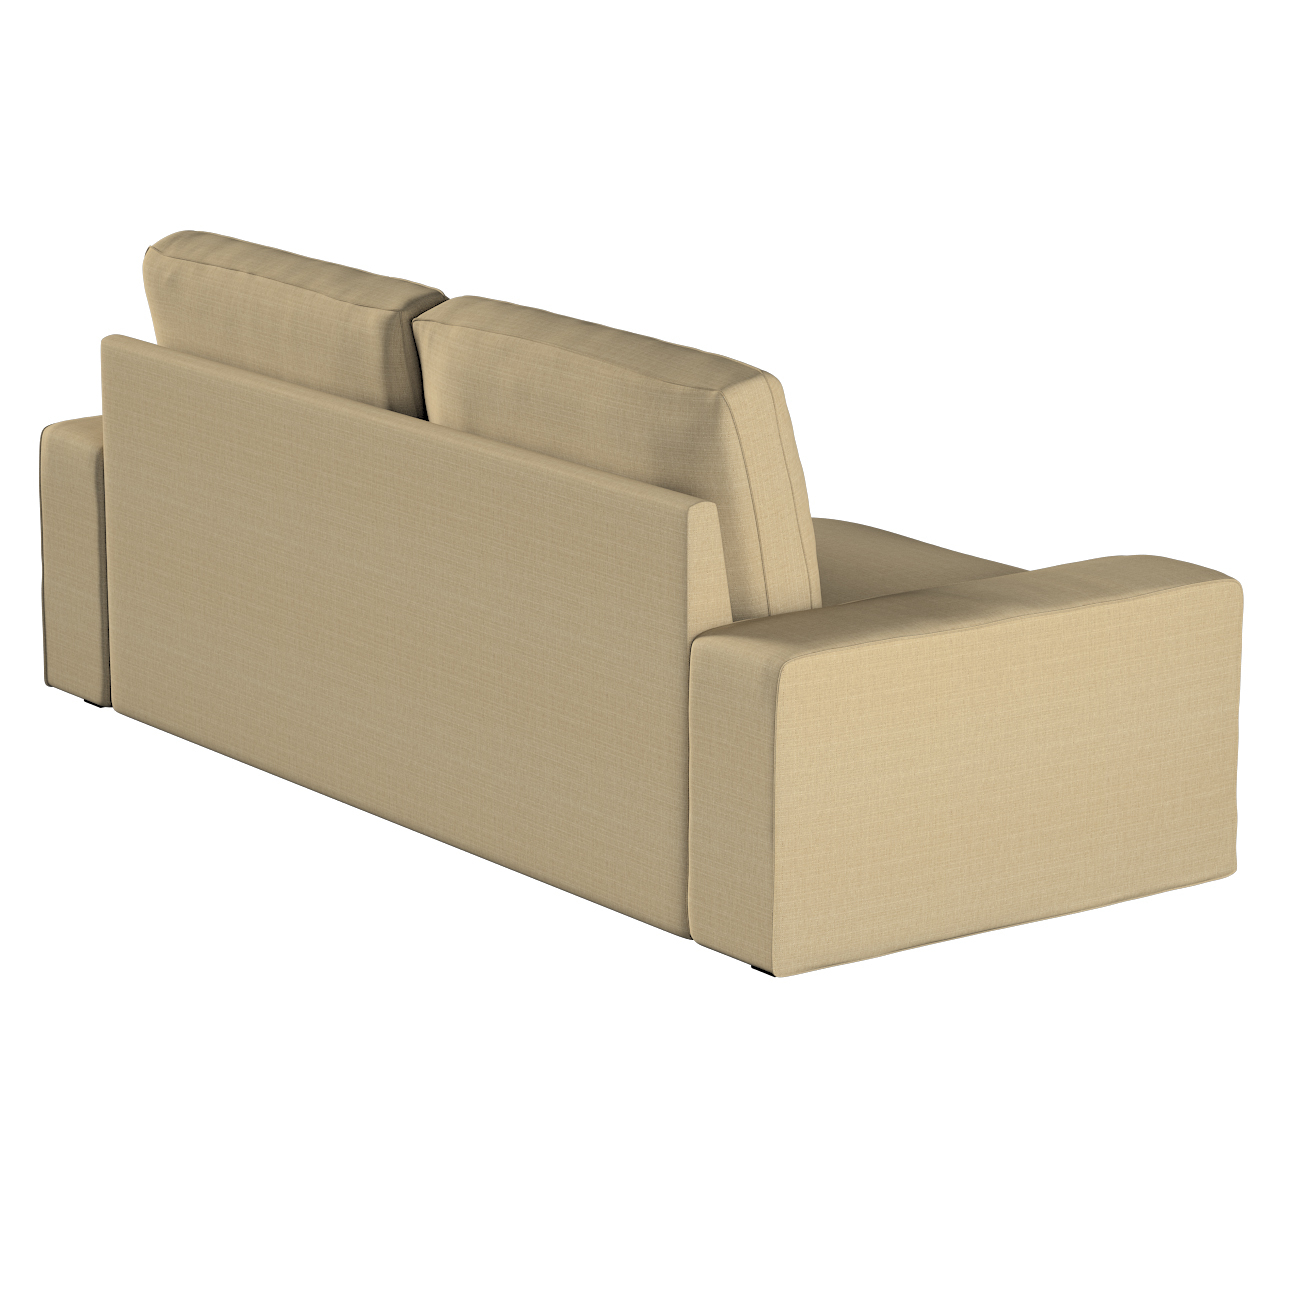 Bezug für Kivik 3-Sitzer Sofa, dunkelbeige, Bezug für Sofa Kivik 3-Sitzer, günstig online kaufen